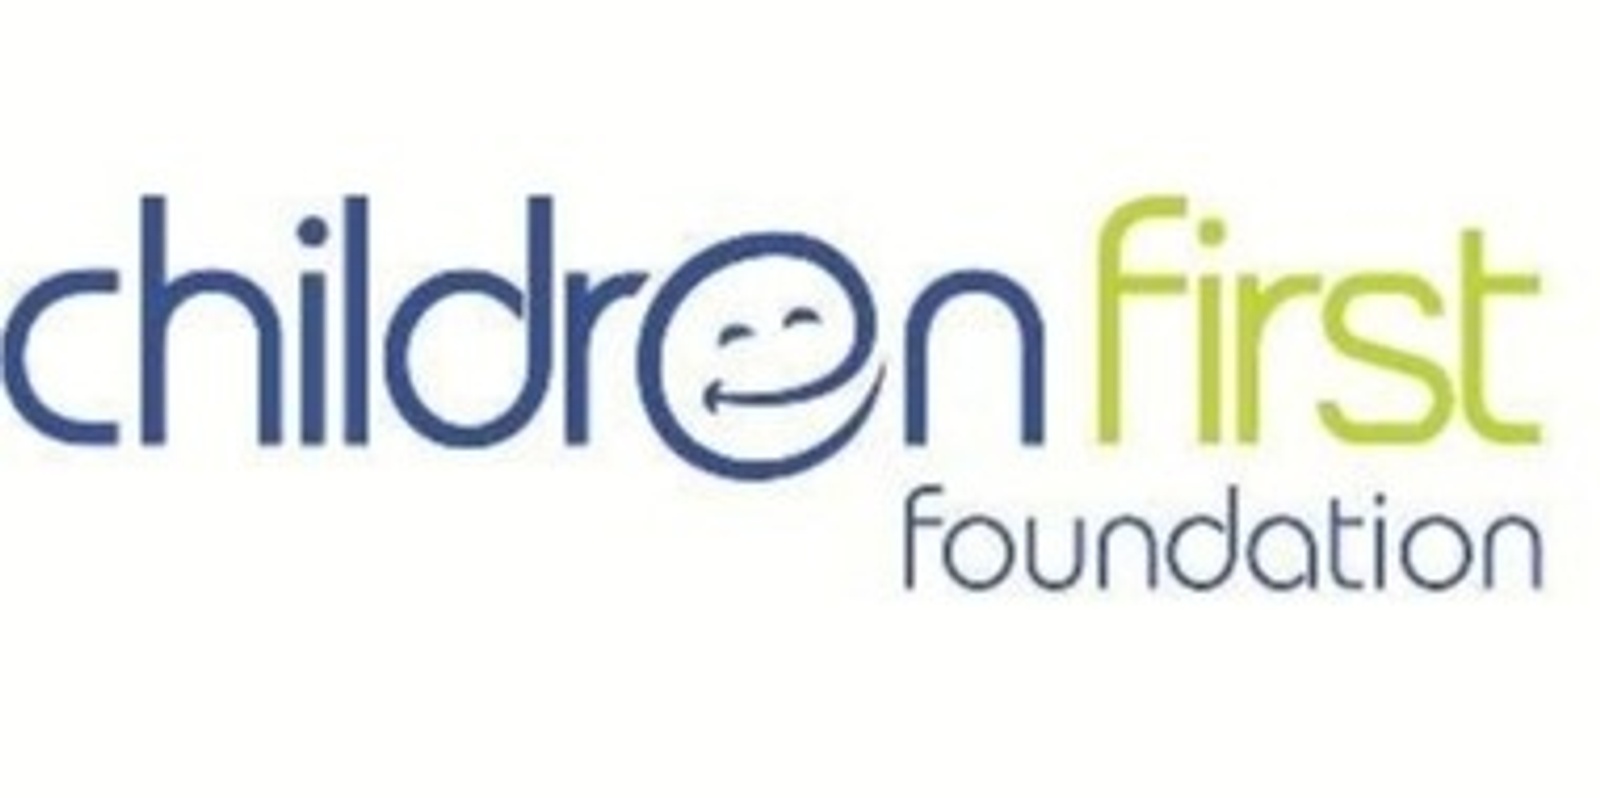 Banner image for Children First Foundation Sparkling Lunch 2020